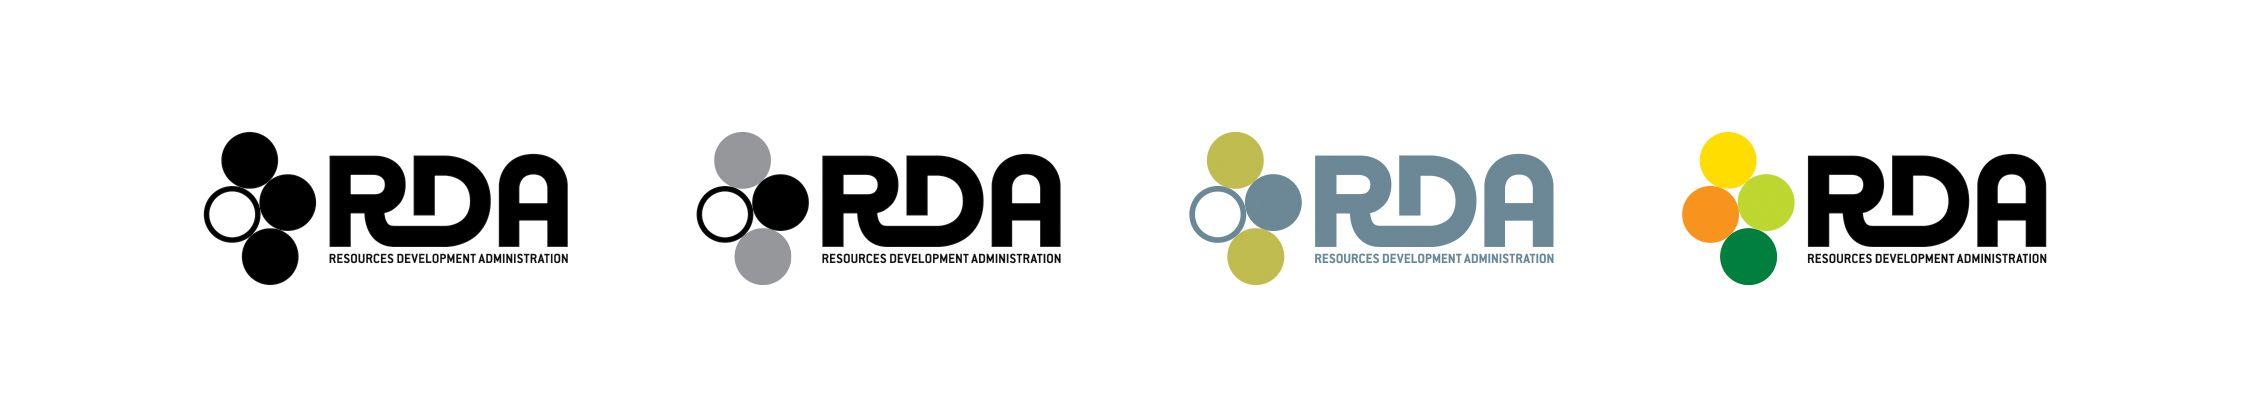 Rda Logo - The Pre-History of the RDA Logo from James Cameron's Avatar – GNDN